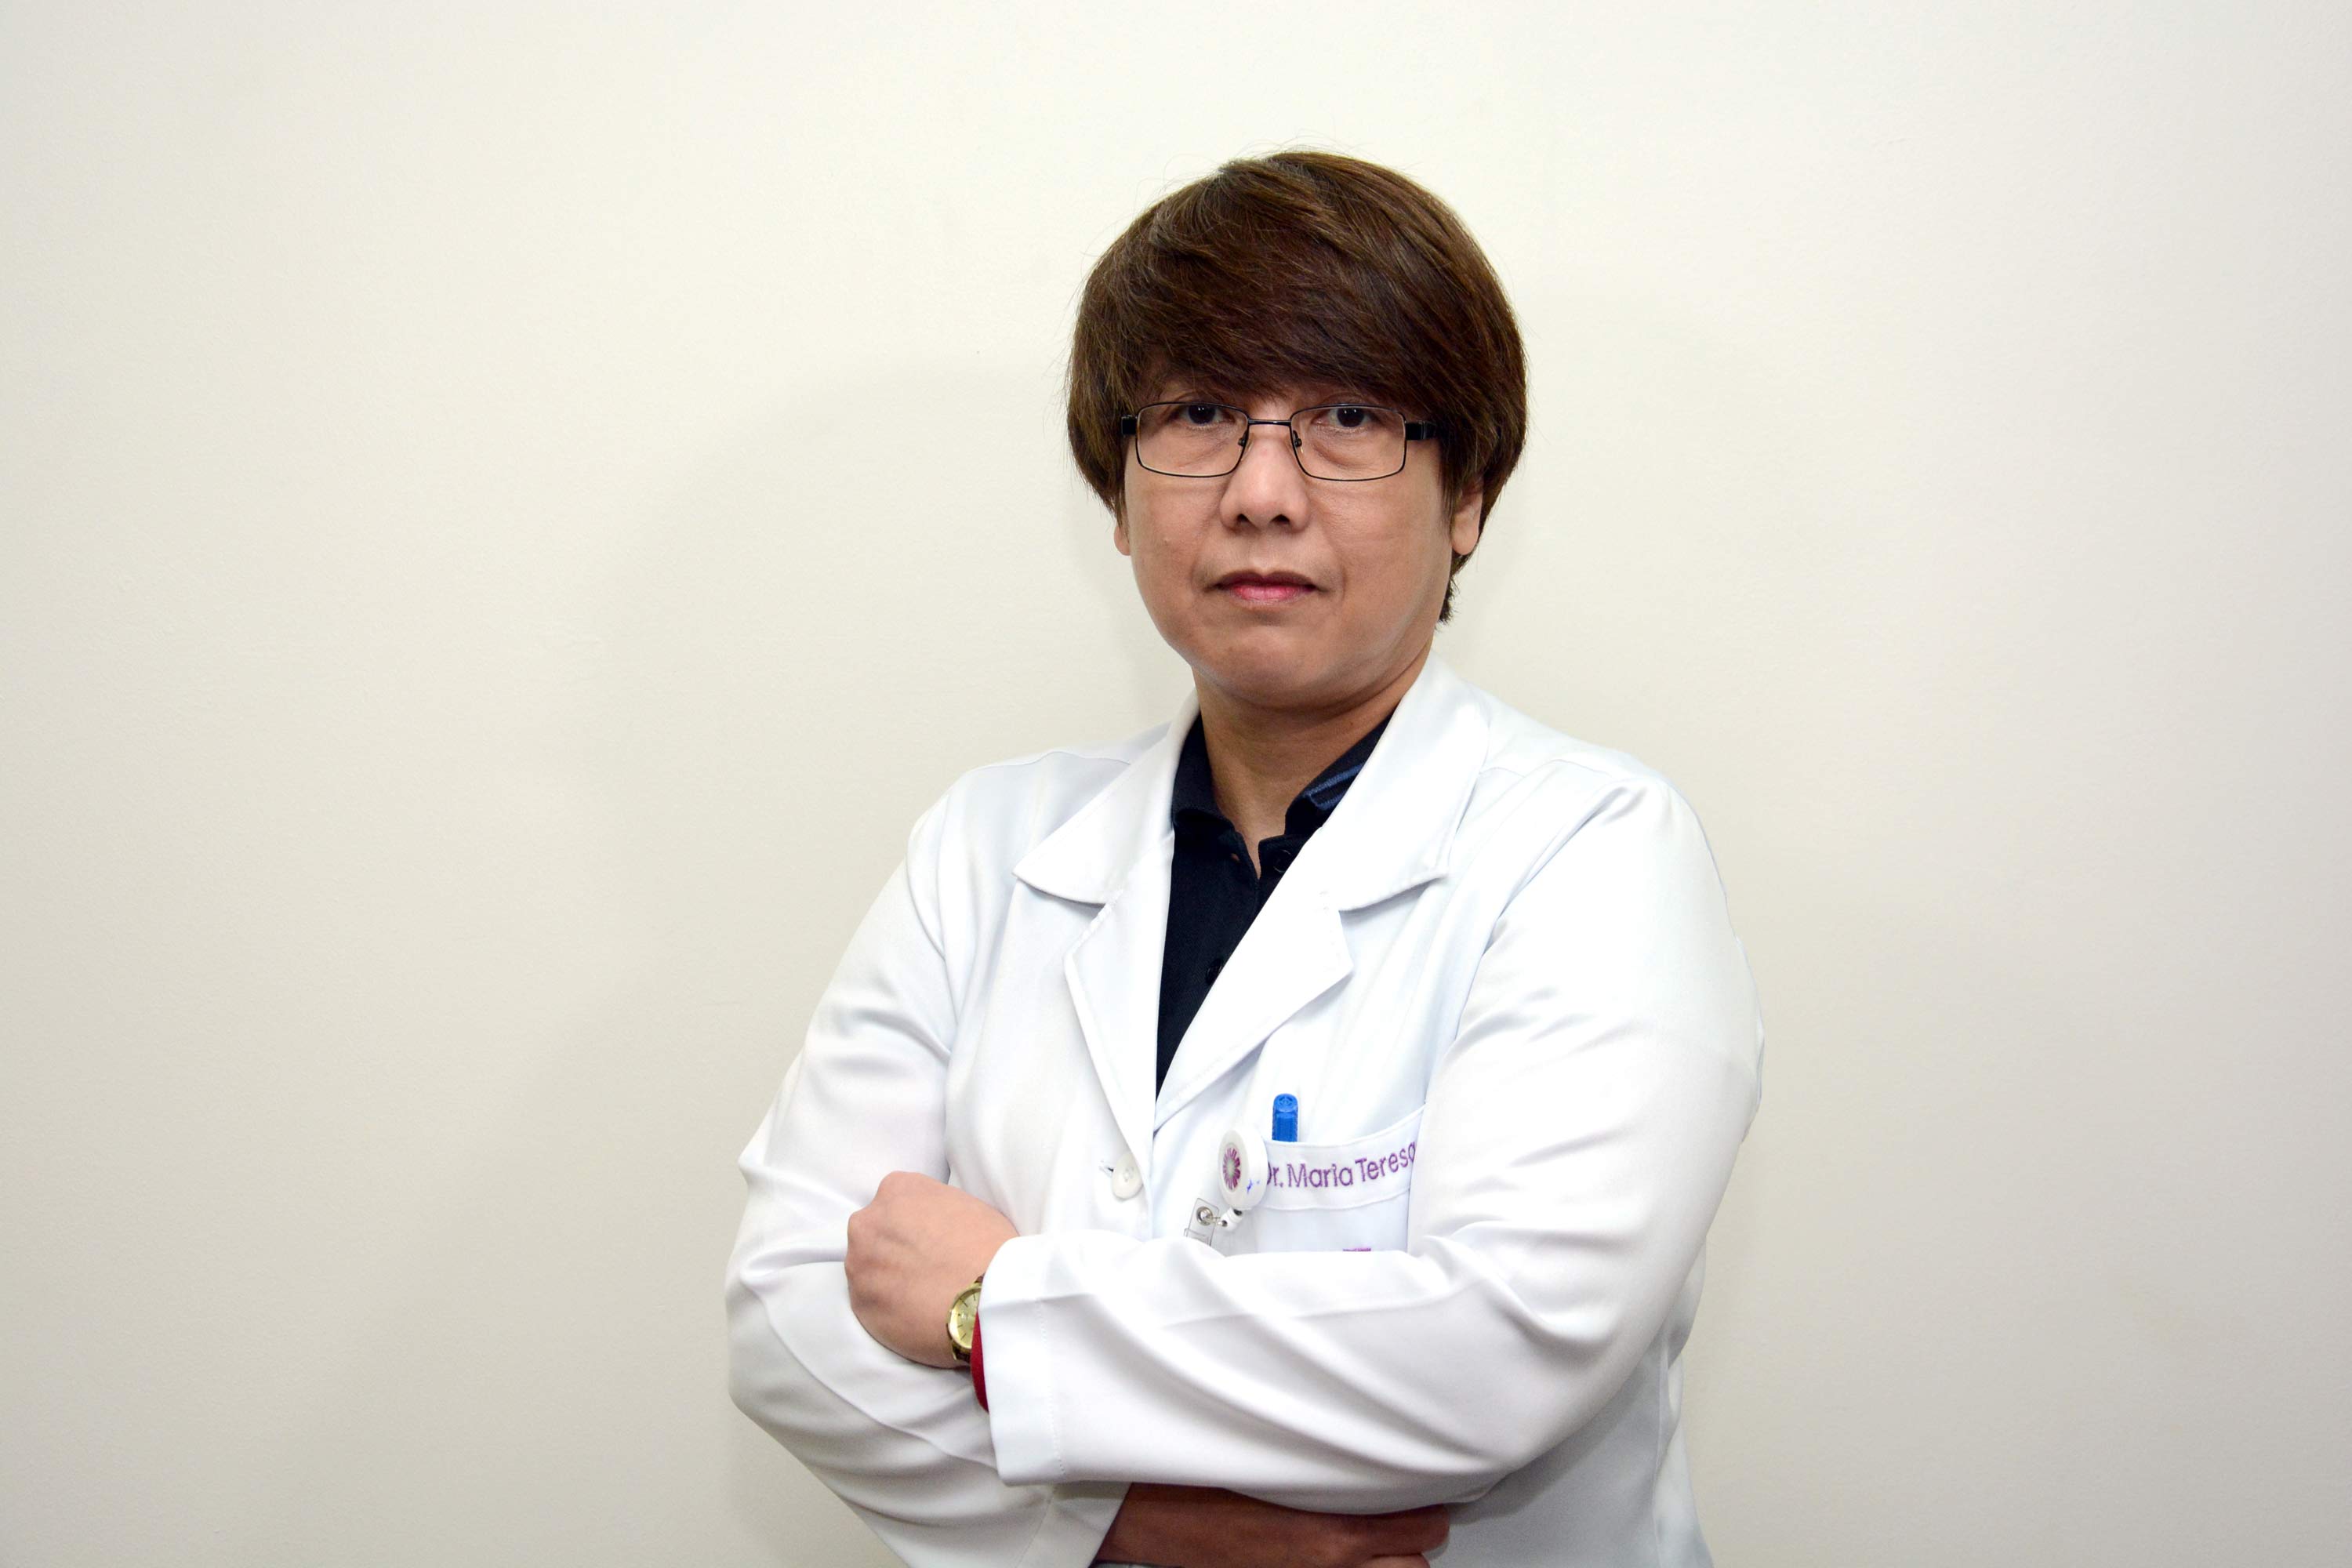 Dr. Maria Catacutan 1